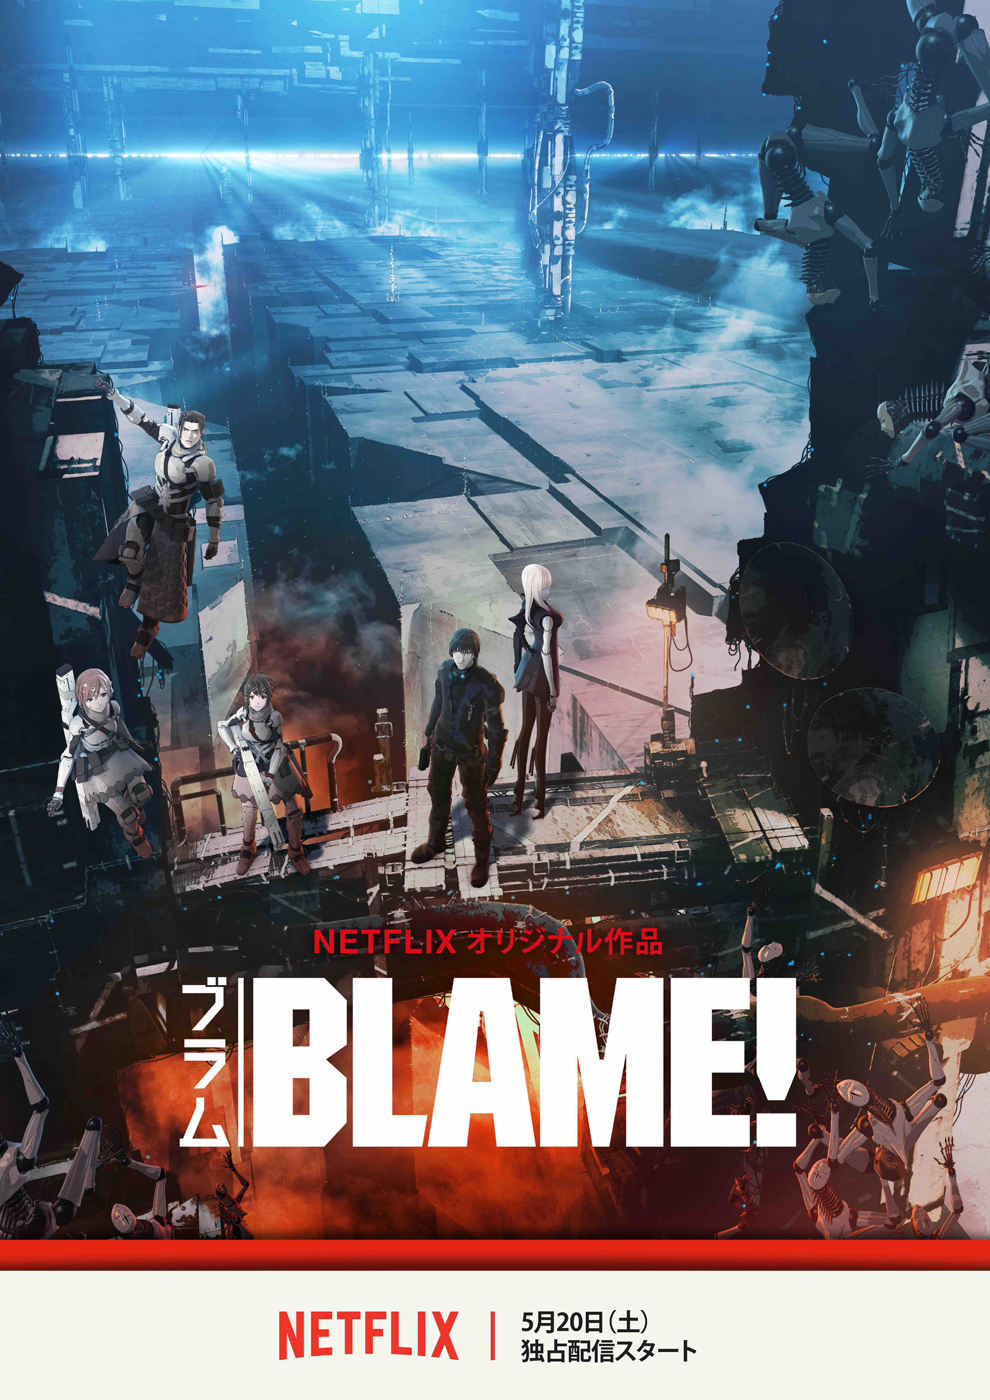 「BLAM!」のメインビジュアル。監督は瀬下寛之氏、アニメーション制作はポリゴン・ピクチュアズ。「シドニアの騎士」で世界を驚かせた監督とアニメーションスタジオが再度タッグを組みます